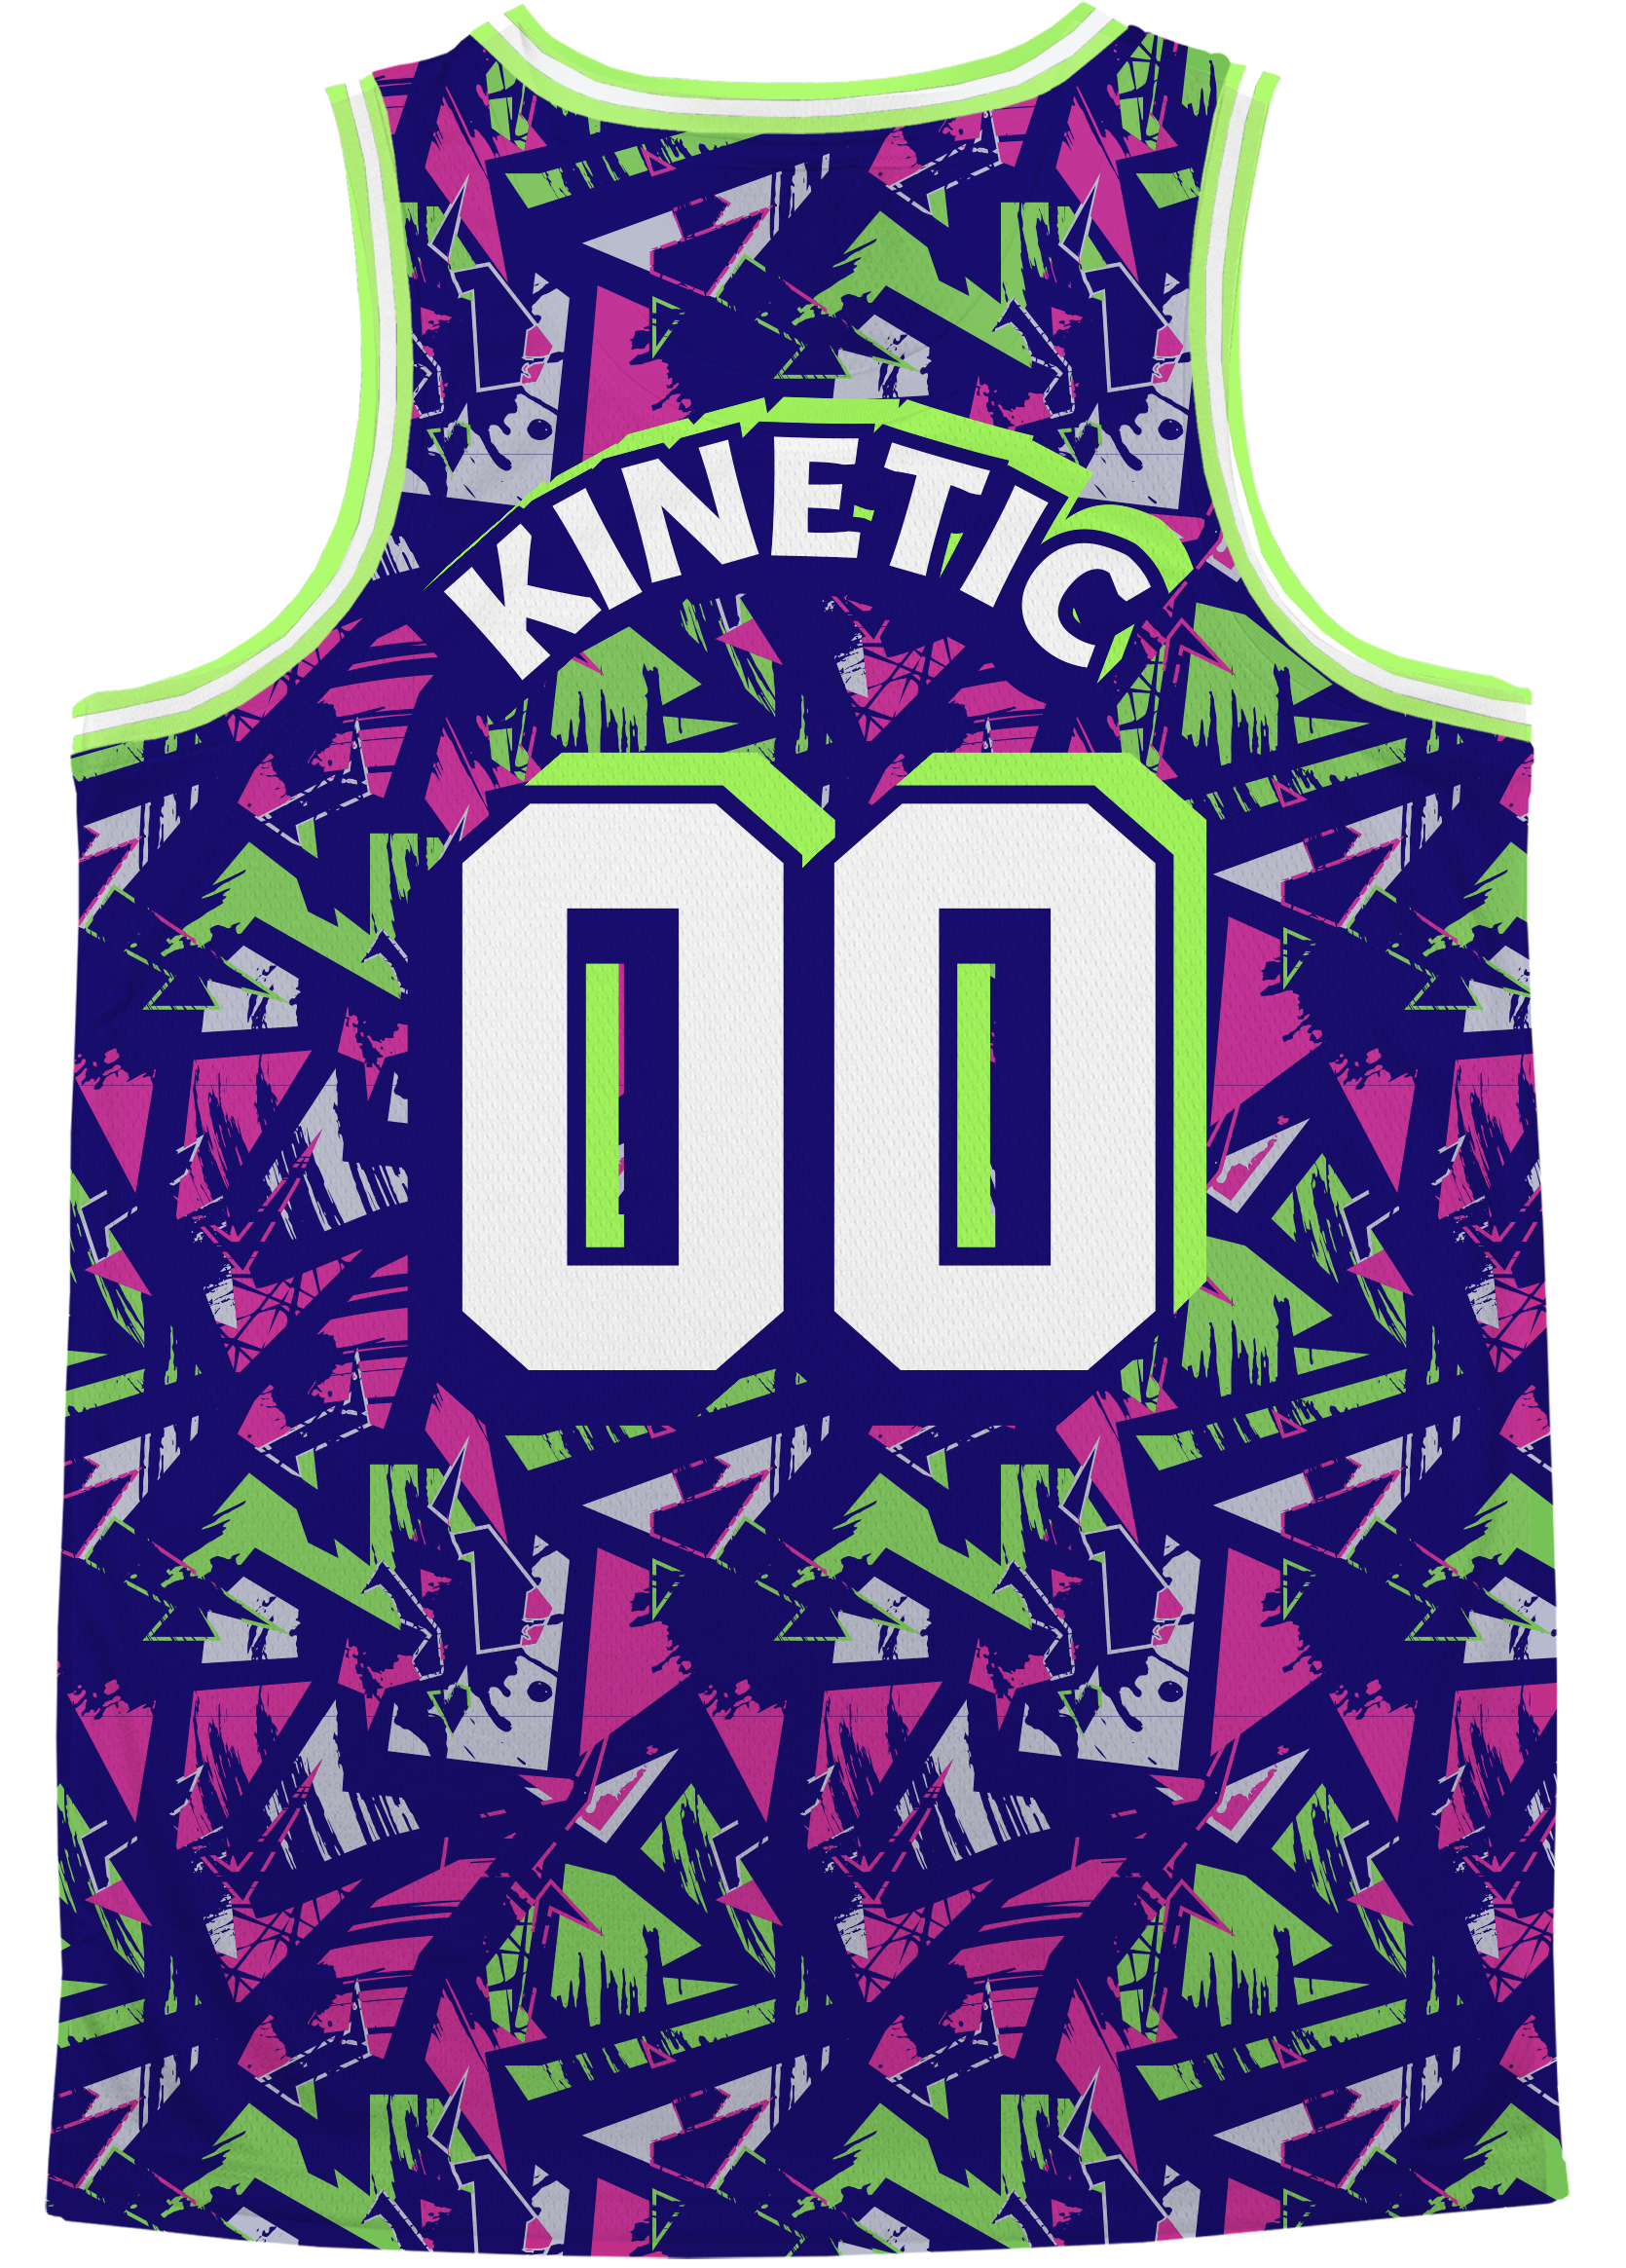 KAPPA DELTA RHO - Purple Shrouds Basketball Jersey